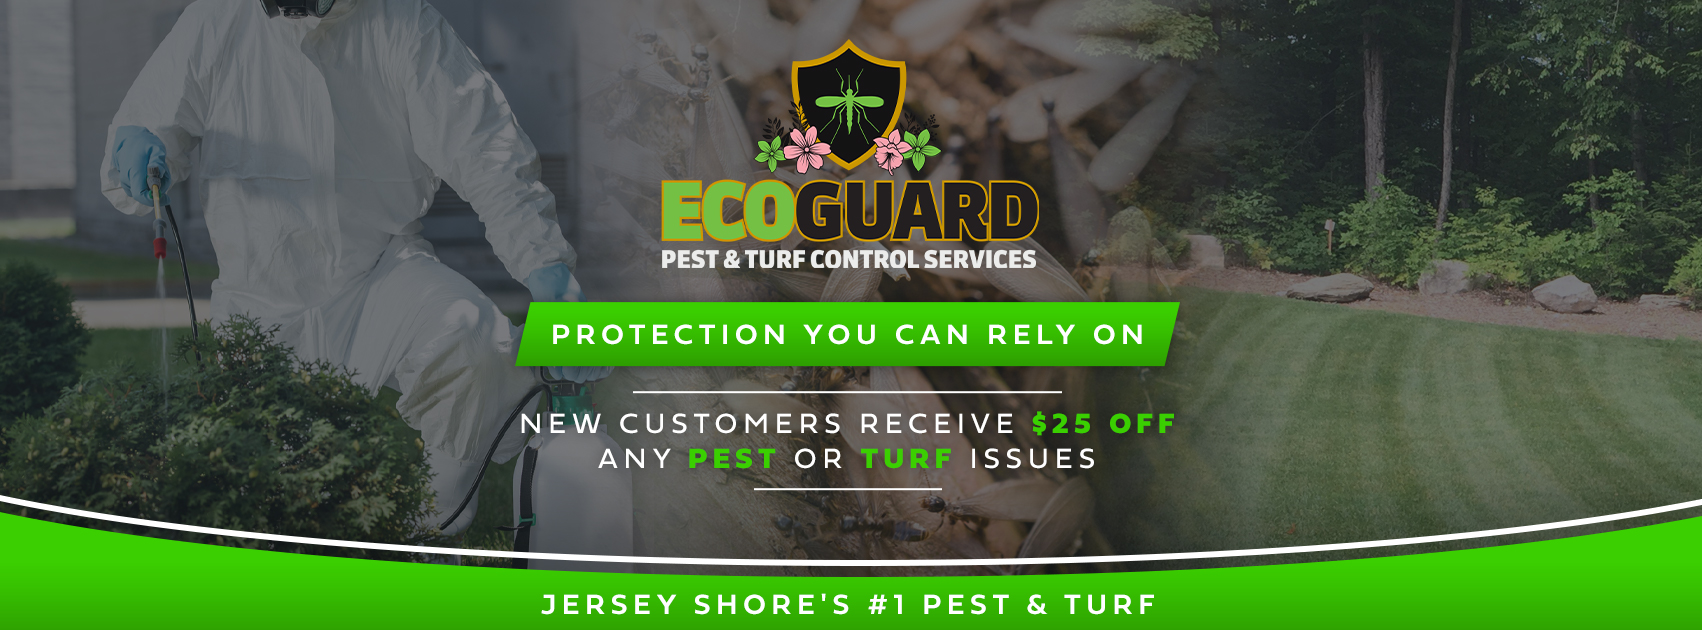 Ecoguard Pest & Turf